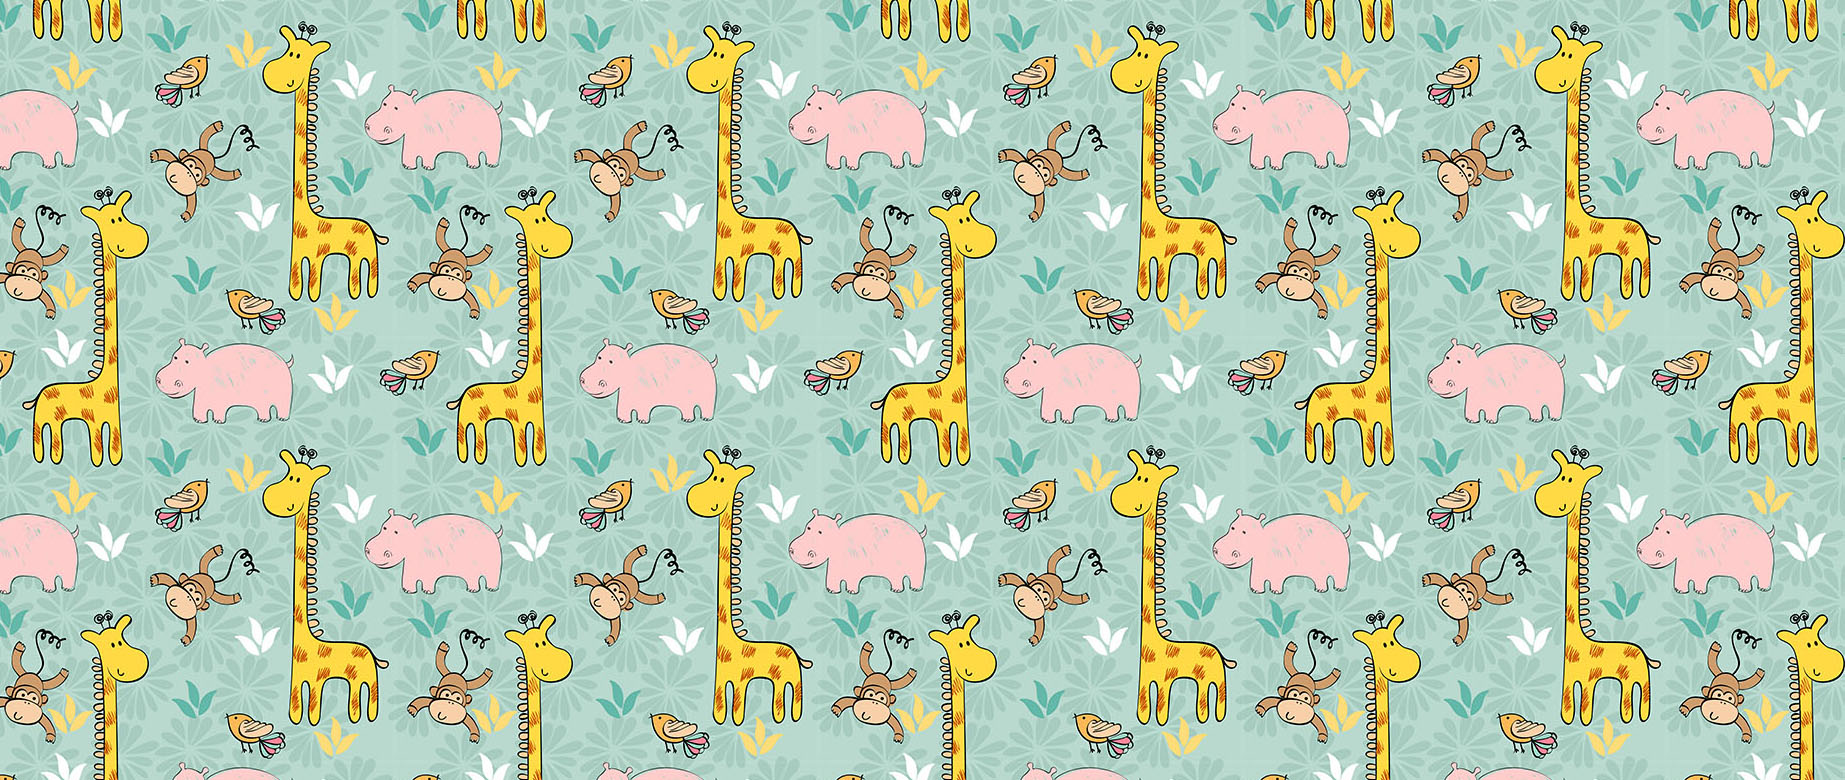 giraffe-monkey-hippo-animals-wallpaper-seamless-repeat-view